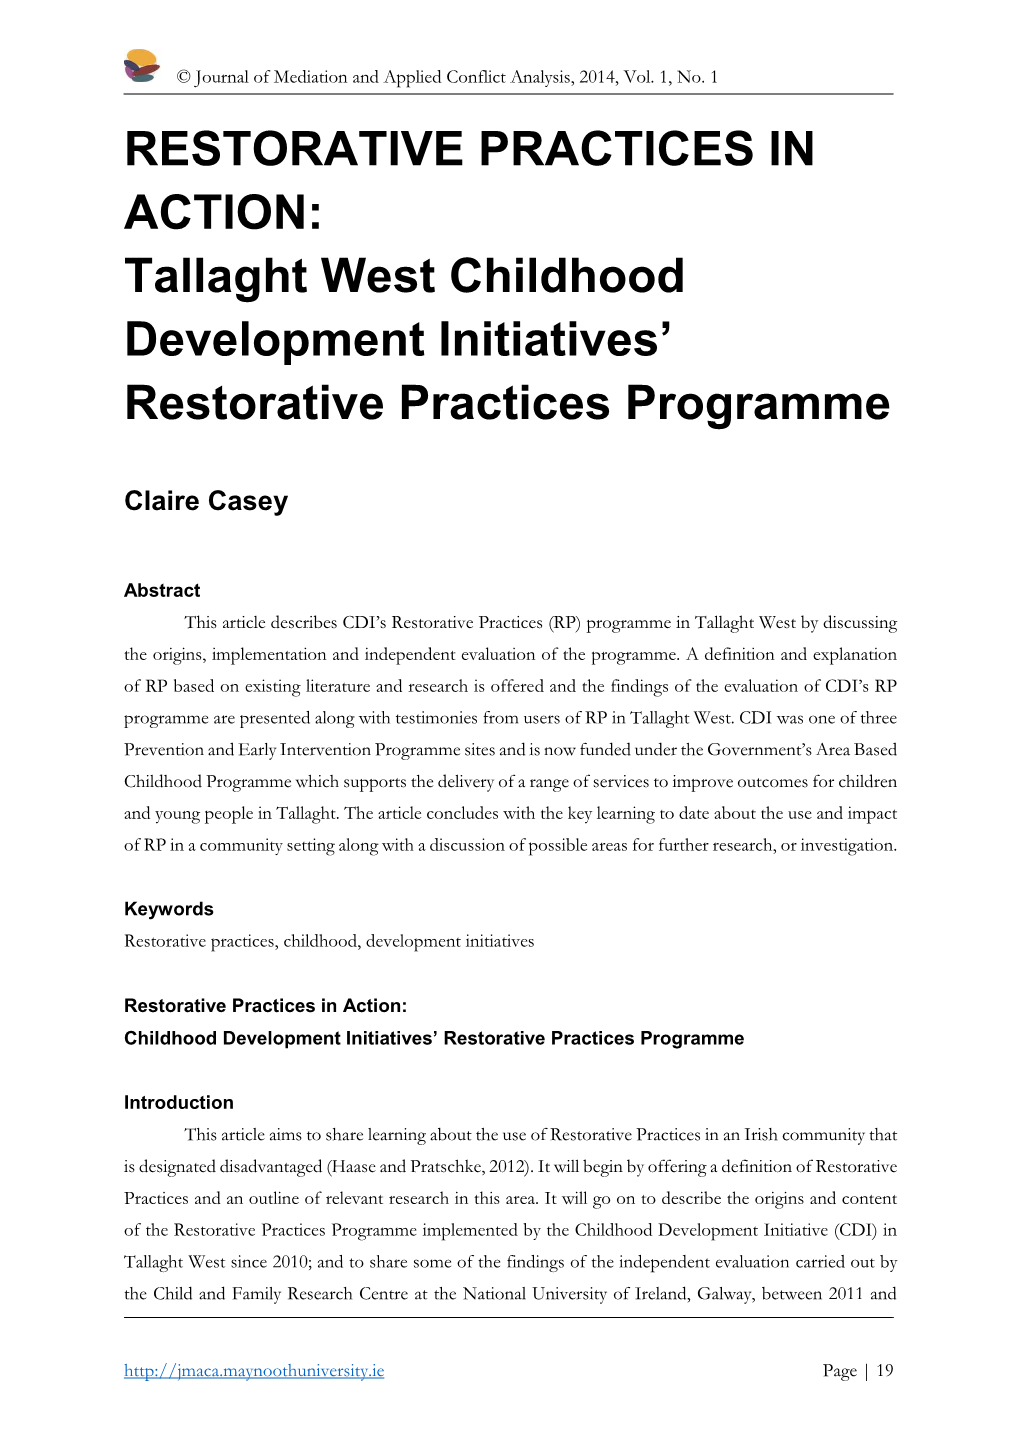 Tallaght West Childhood Development Initiatives' Restorative Practices Programme